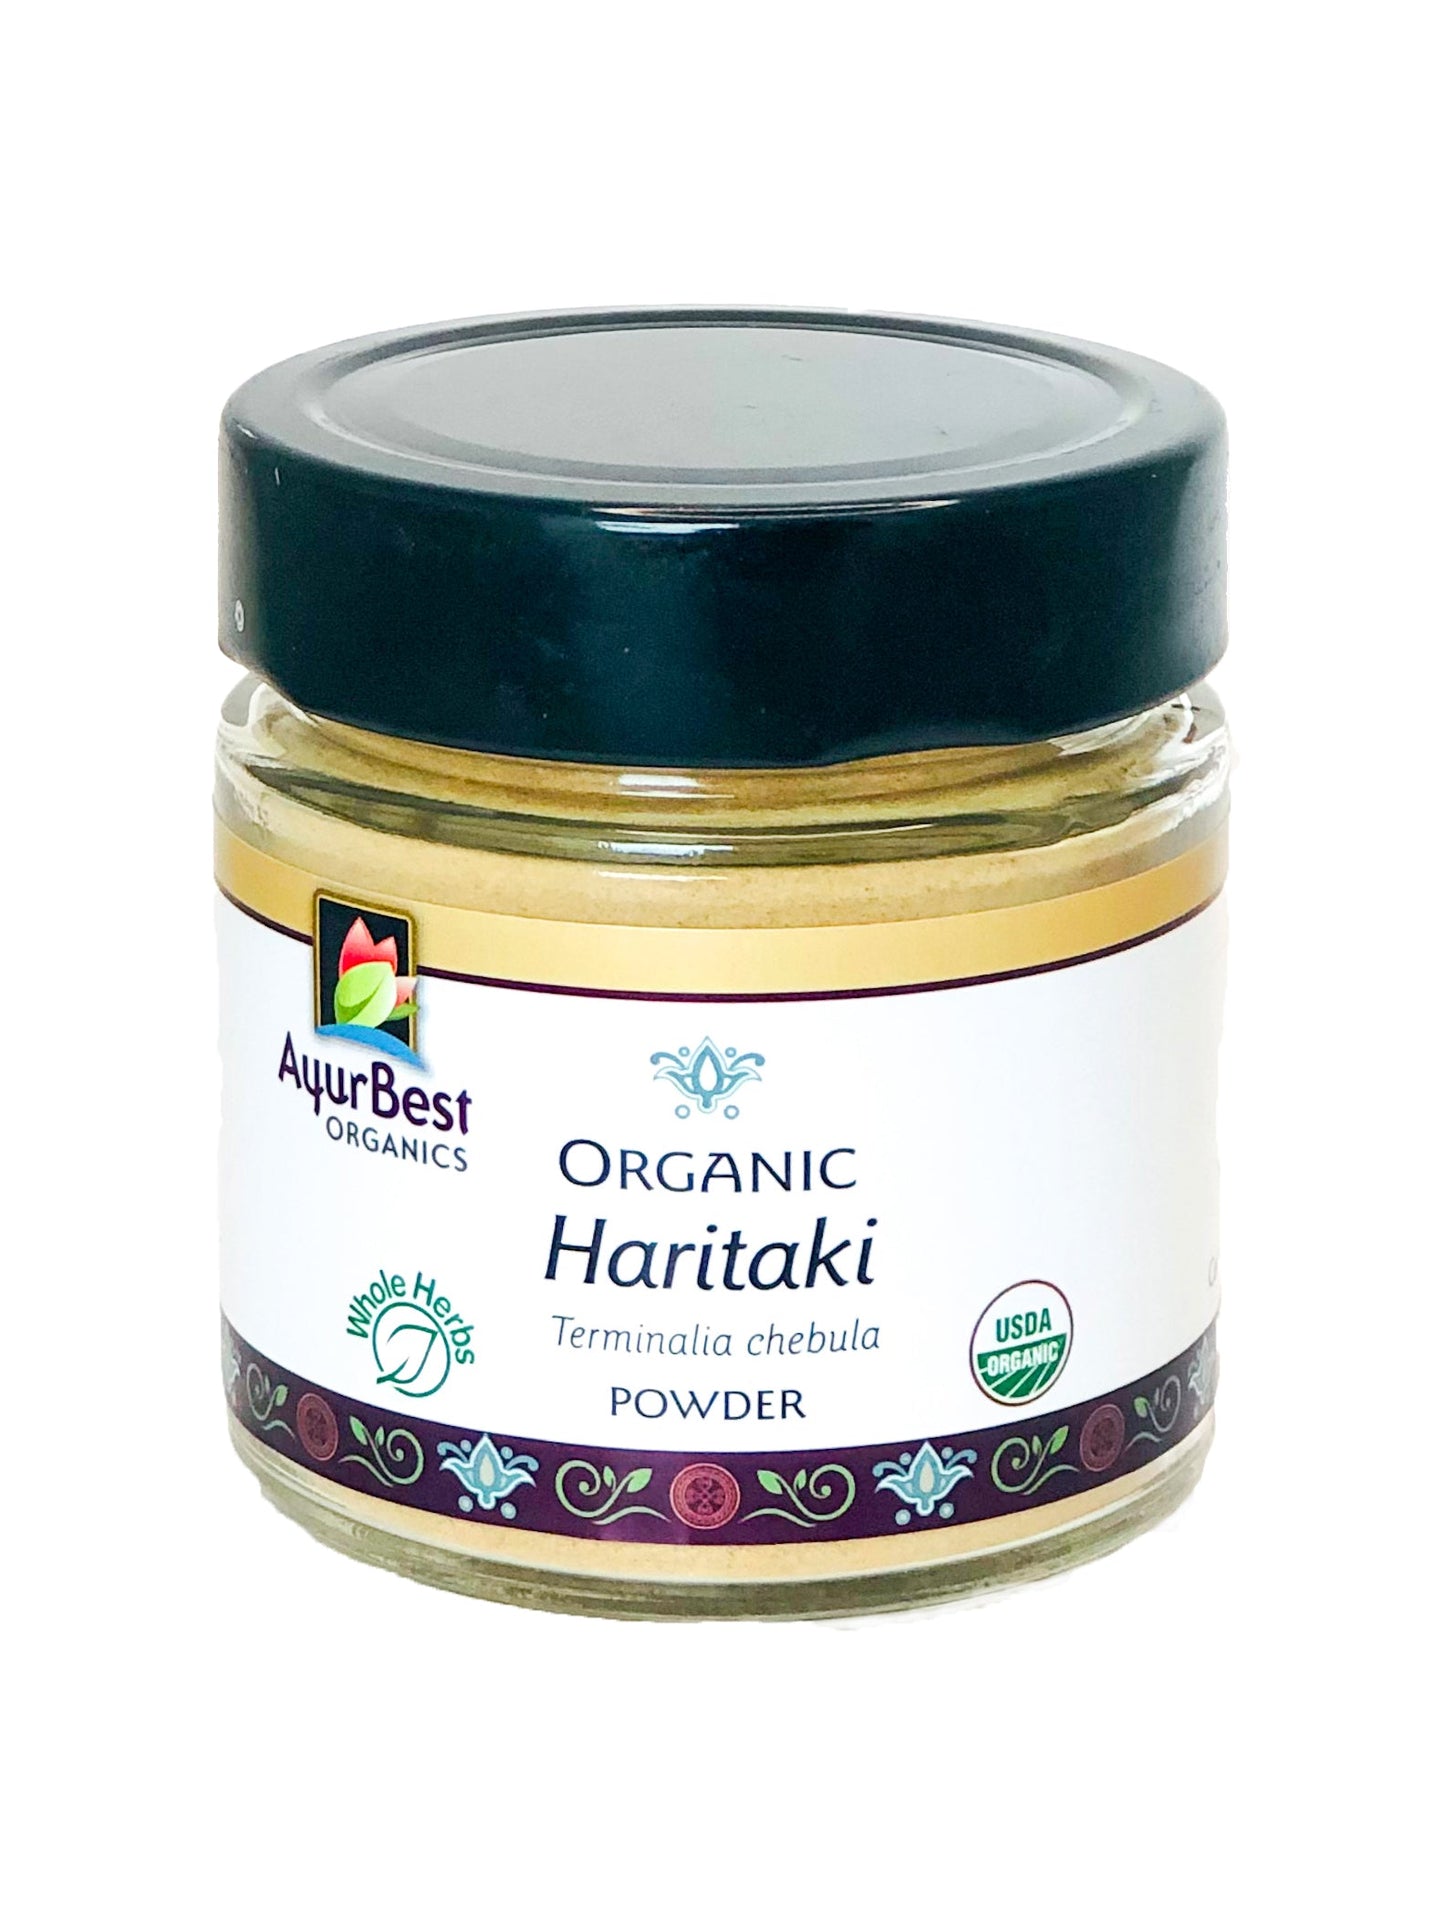 Wholesale Spices & Herbs - Haritaki Powder, Organic 4.4oz(125g) Jar